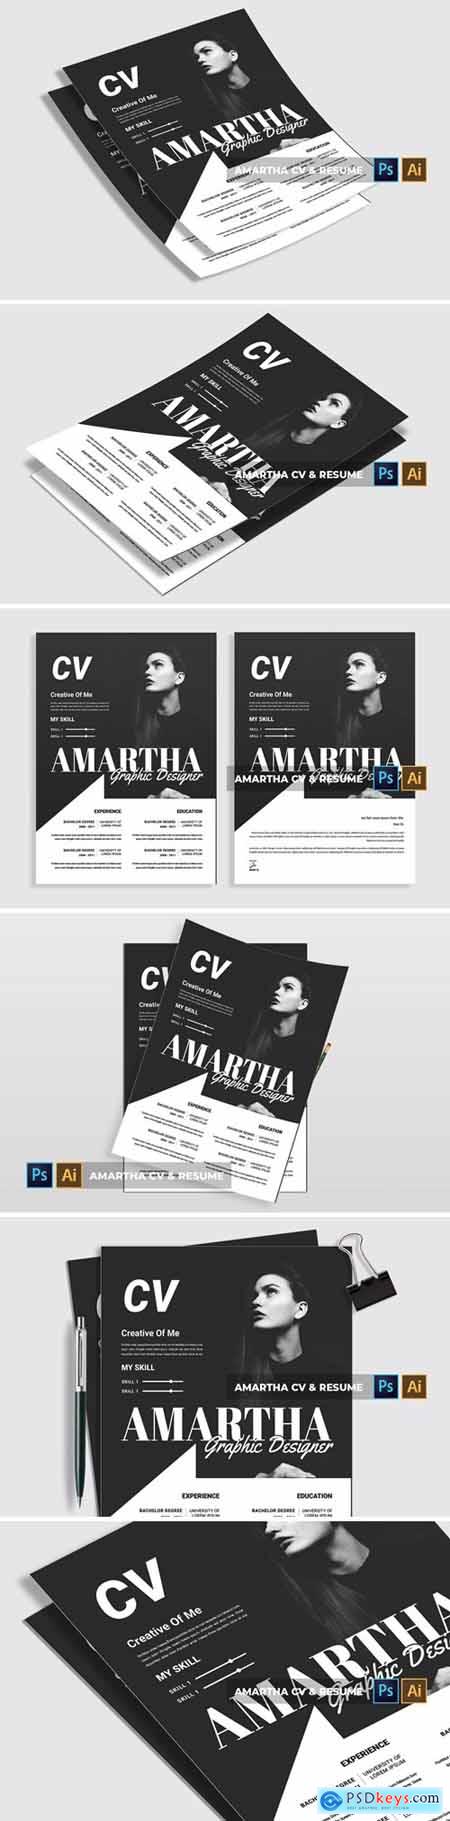 Amartha - CV & Resume